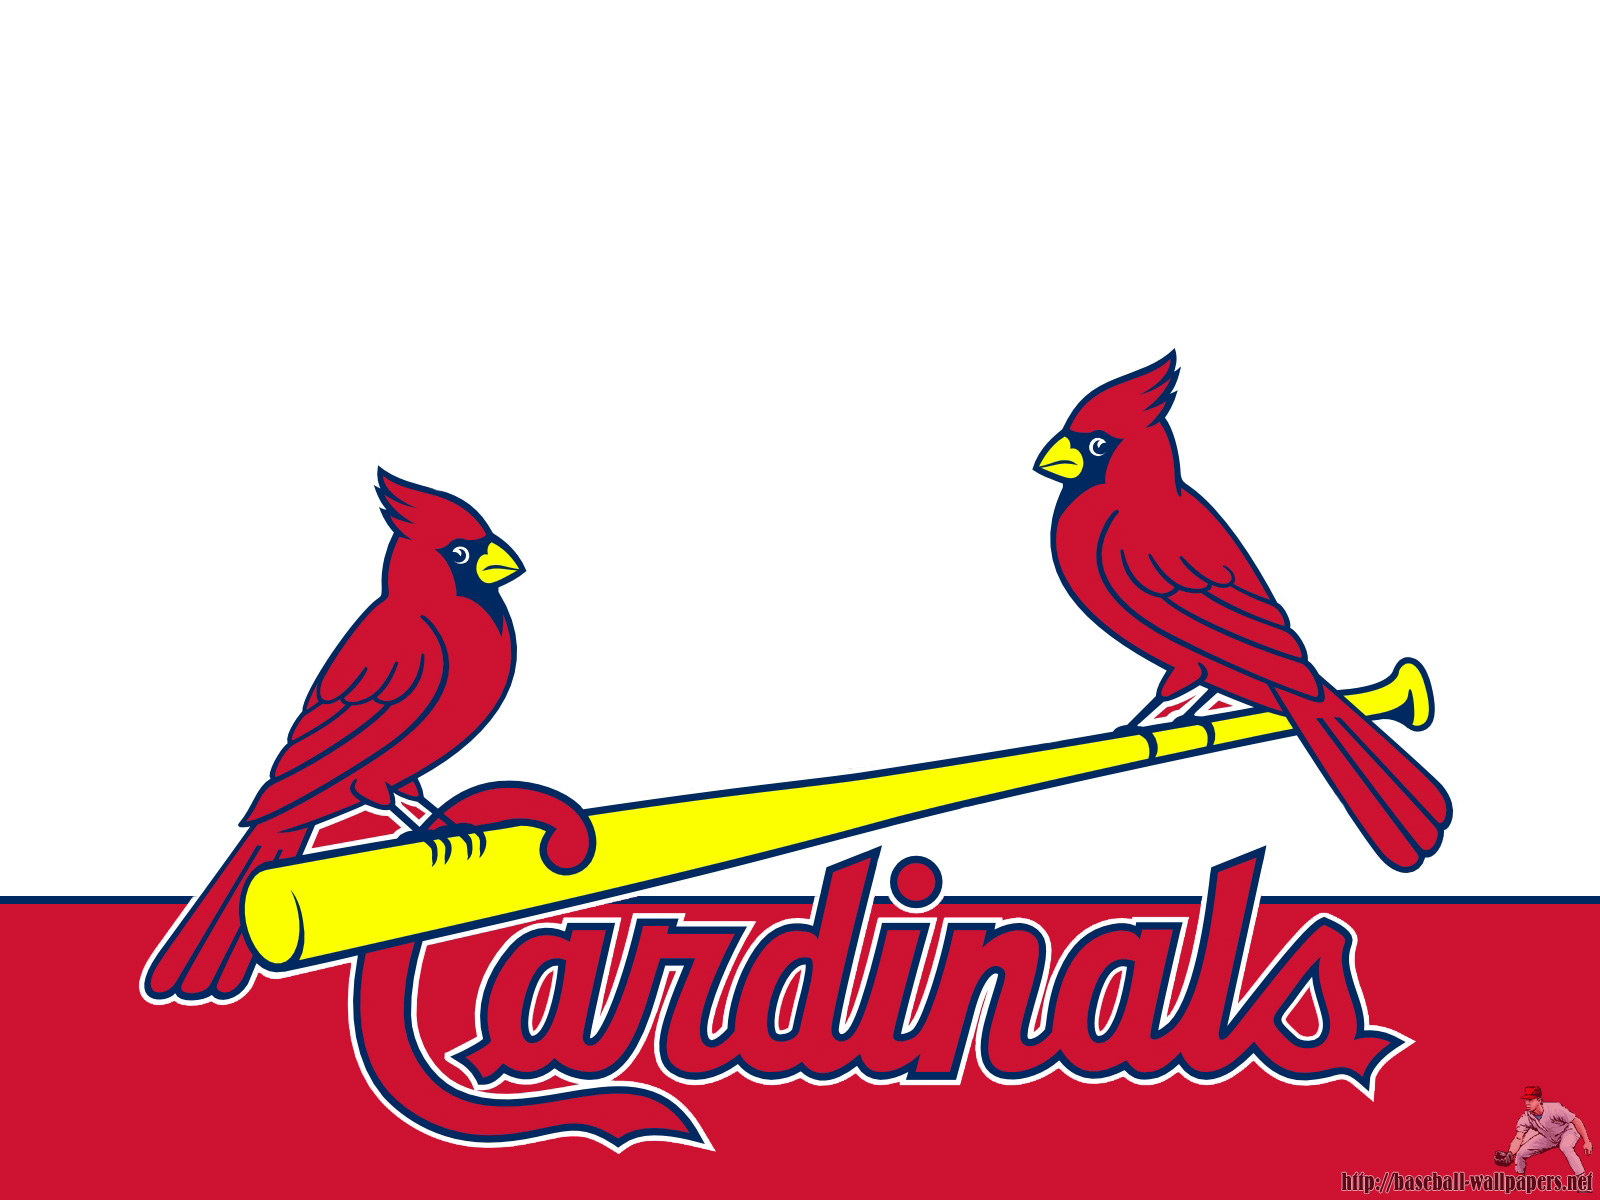 St. Louis Cardinals Wallpapers | St. Louis Cardinals Background ...